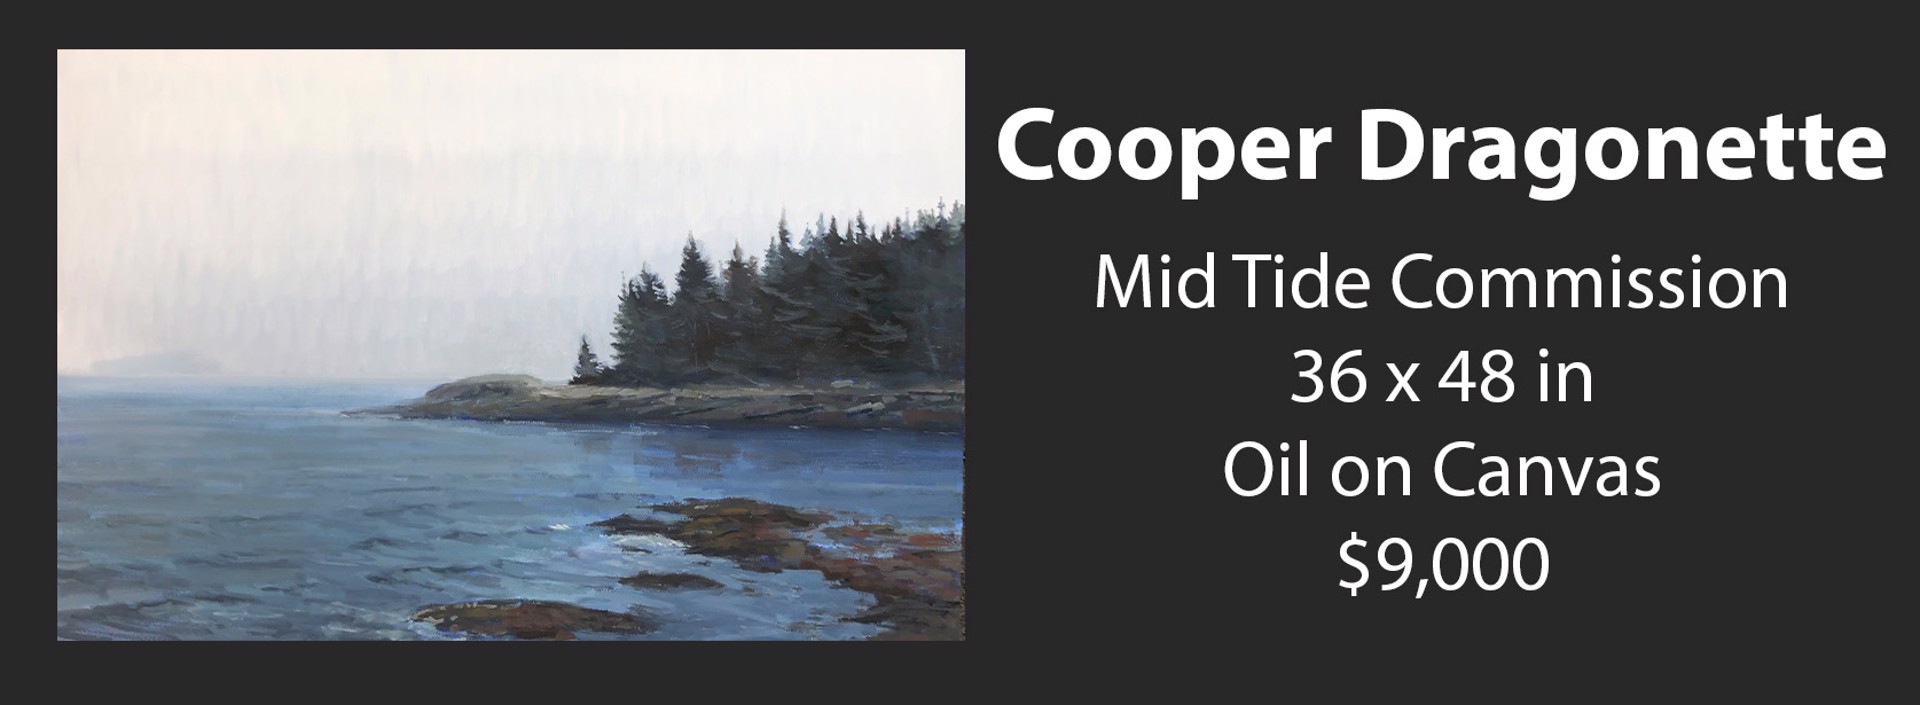 Mid Tide Commission by Cooper Dragonette